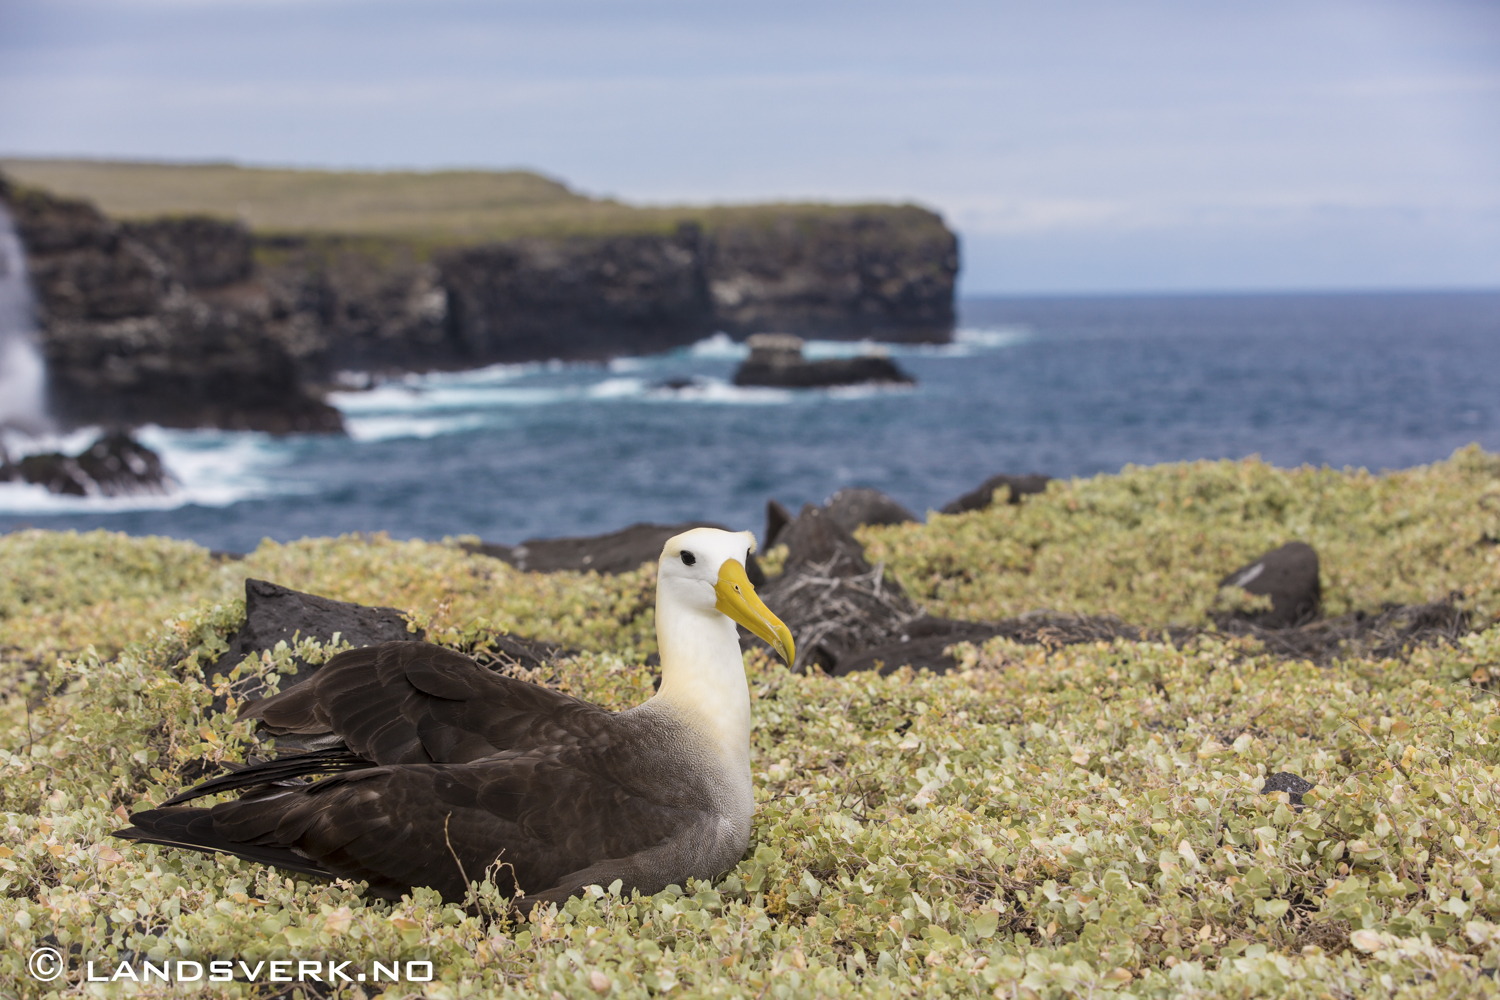 Wild Albatross, Punta Suarez, Isla Espanola, Galapagos. 

(Canon EOS 5D Mark III / Canon EF 70-200mm f/2.8 L IS II USM)